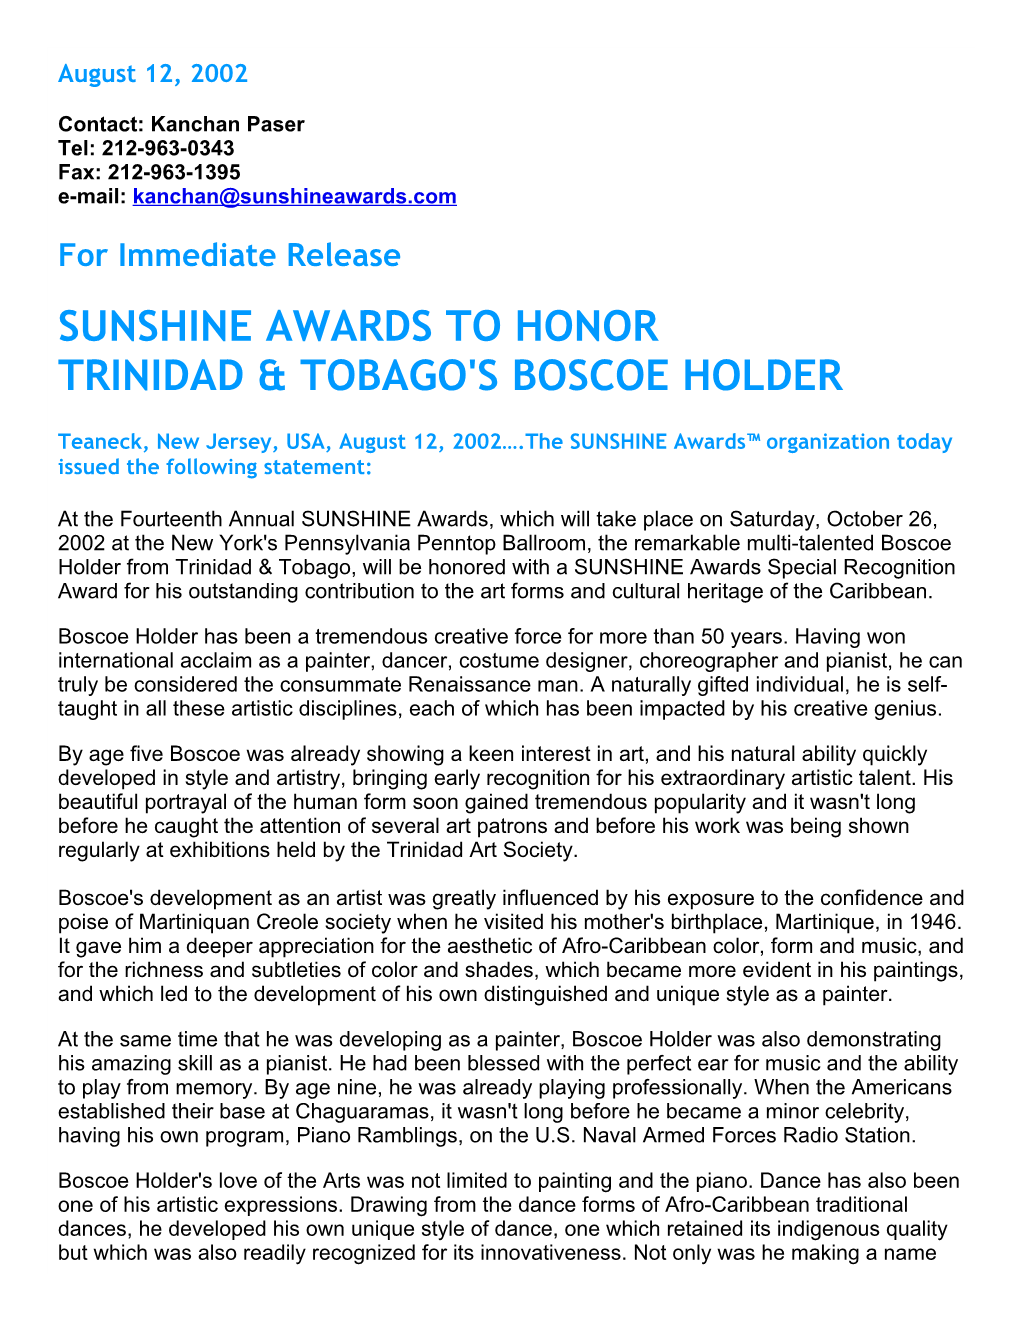 Sunshine Awards to Honor Trinidad & Tobago's Boscoe